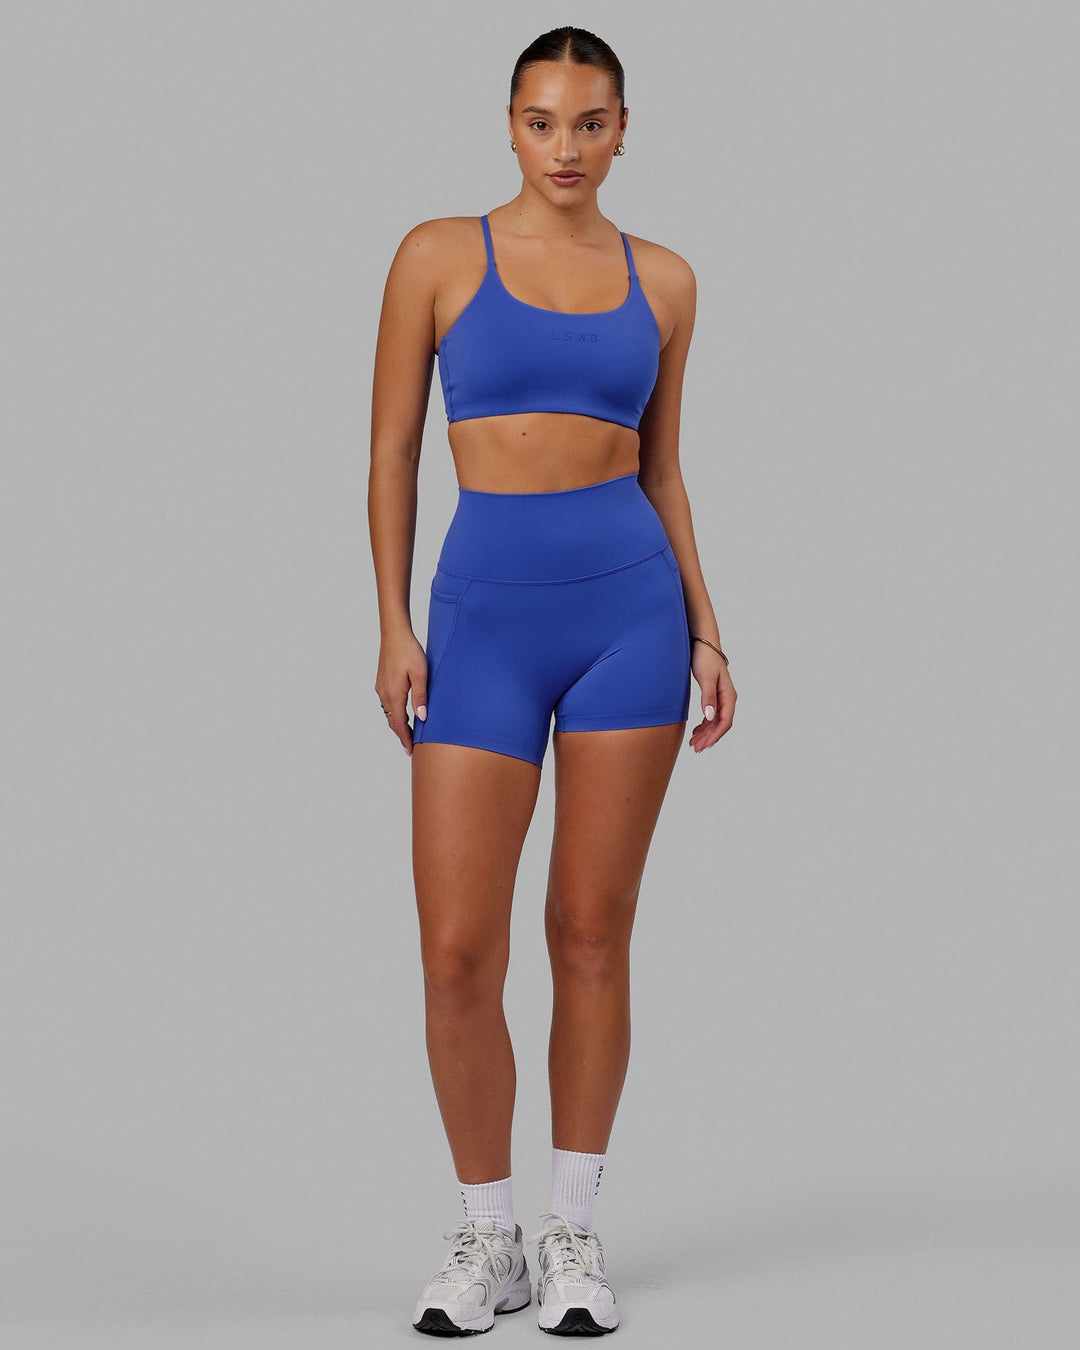 Woman wearing Twist Sports Bra - Power Cobalt